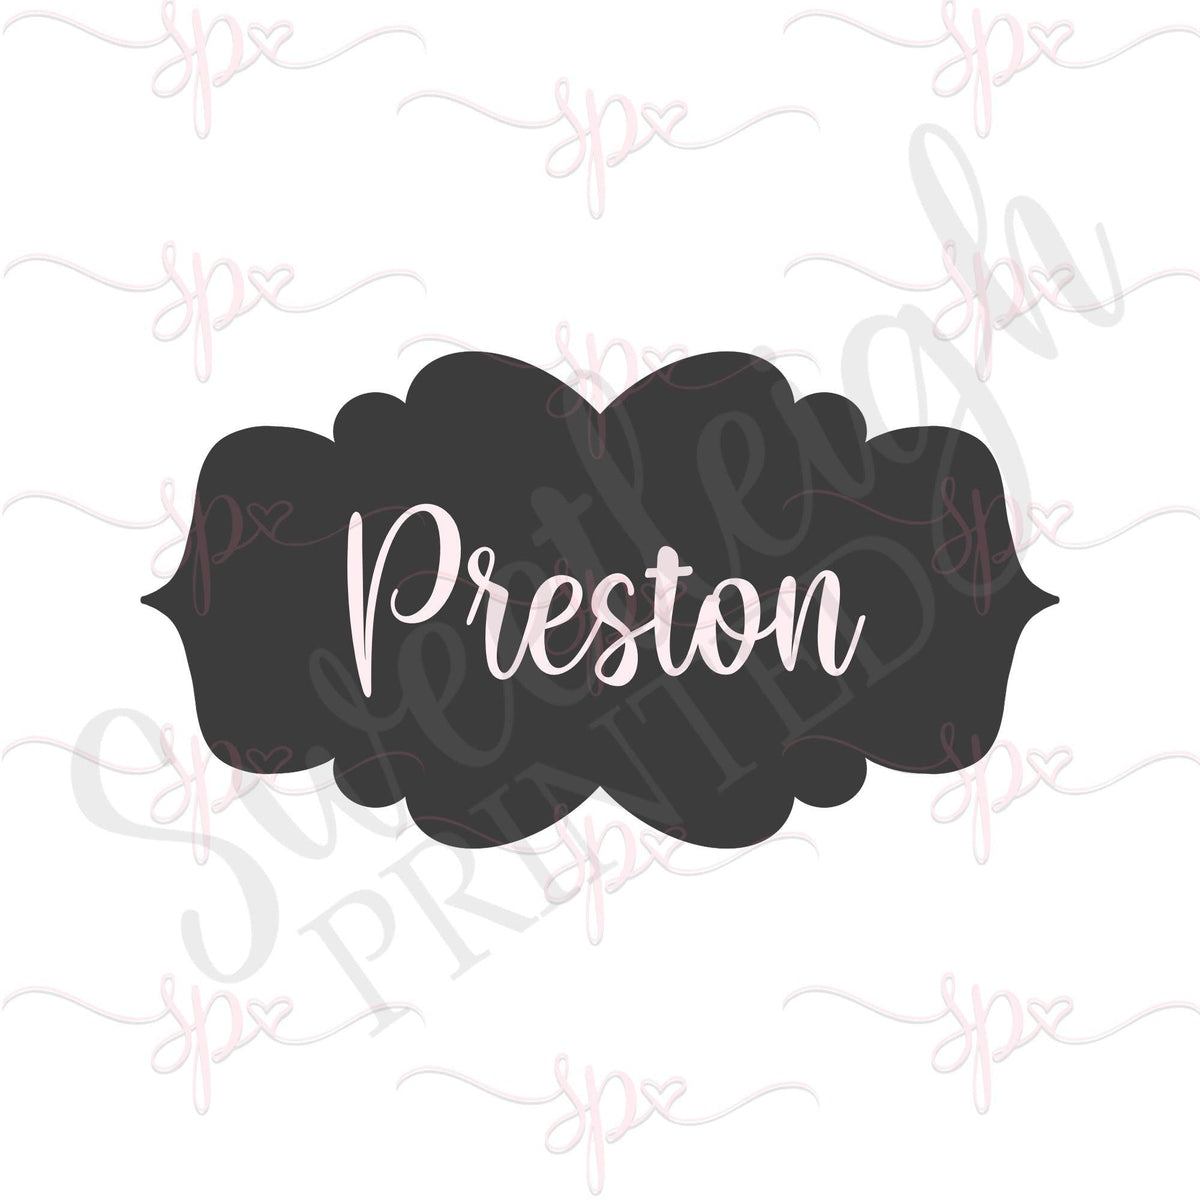 Preston Plaque Cookie Cutter - Sweetleigh 